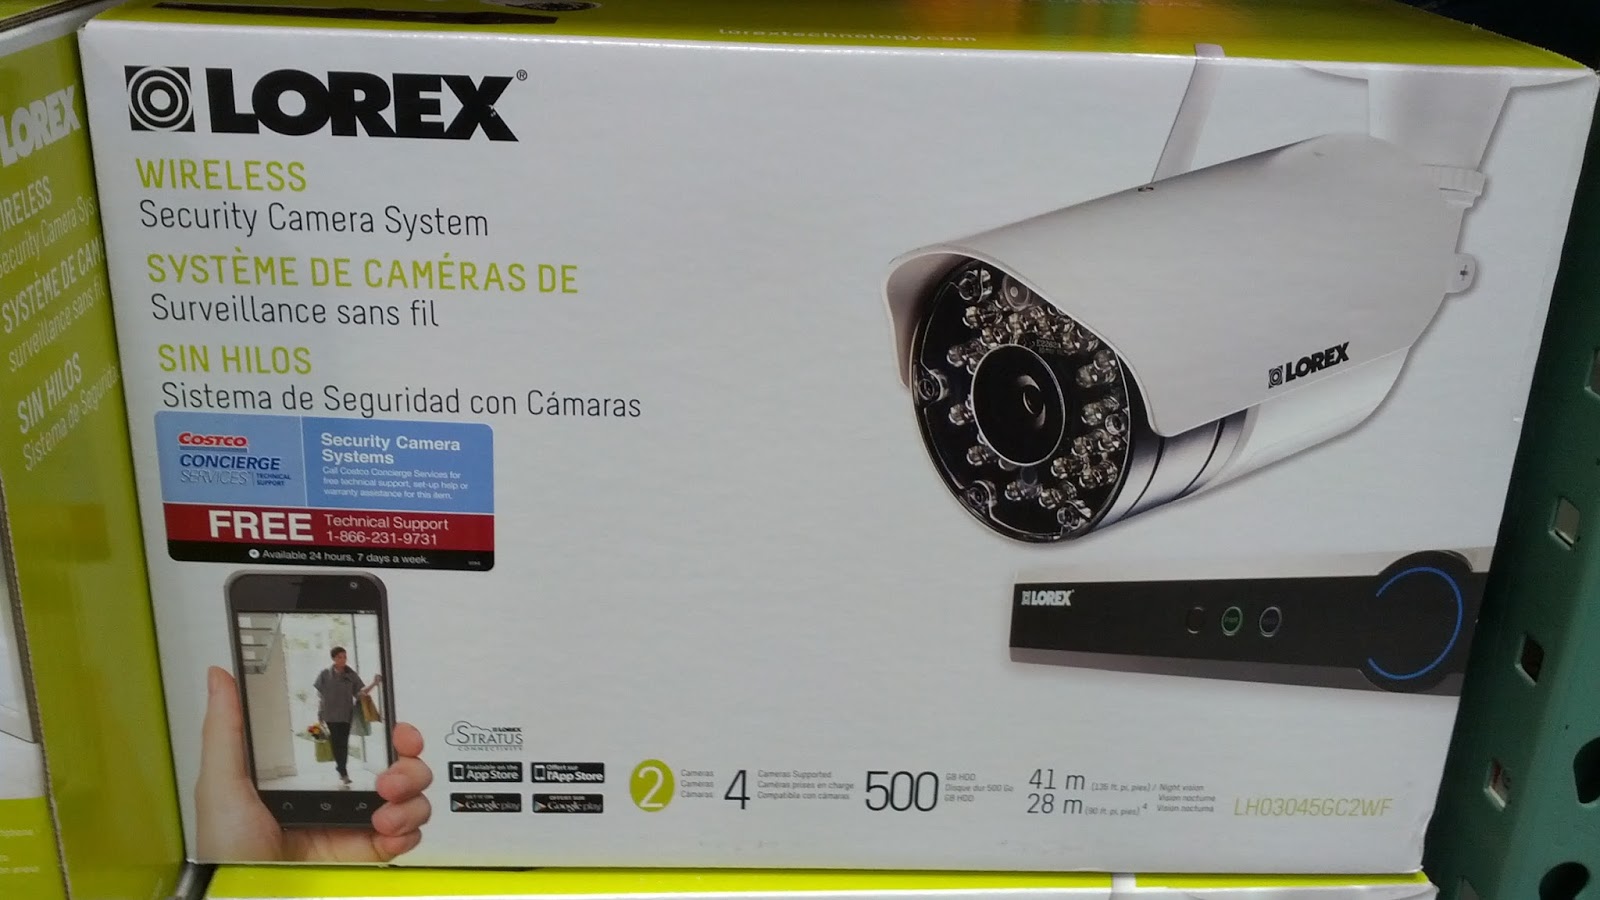 Lorex LH03045GC2WF Surveillance System and Wireless Camera